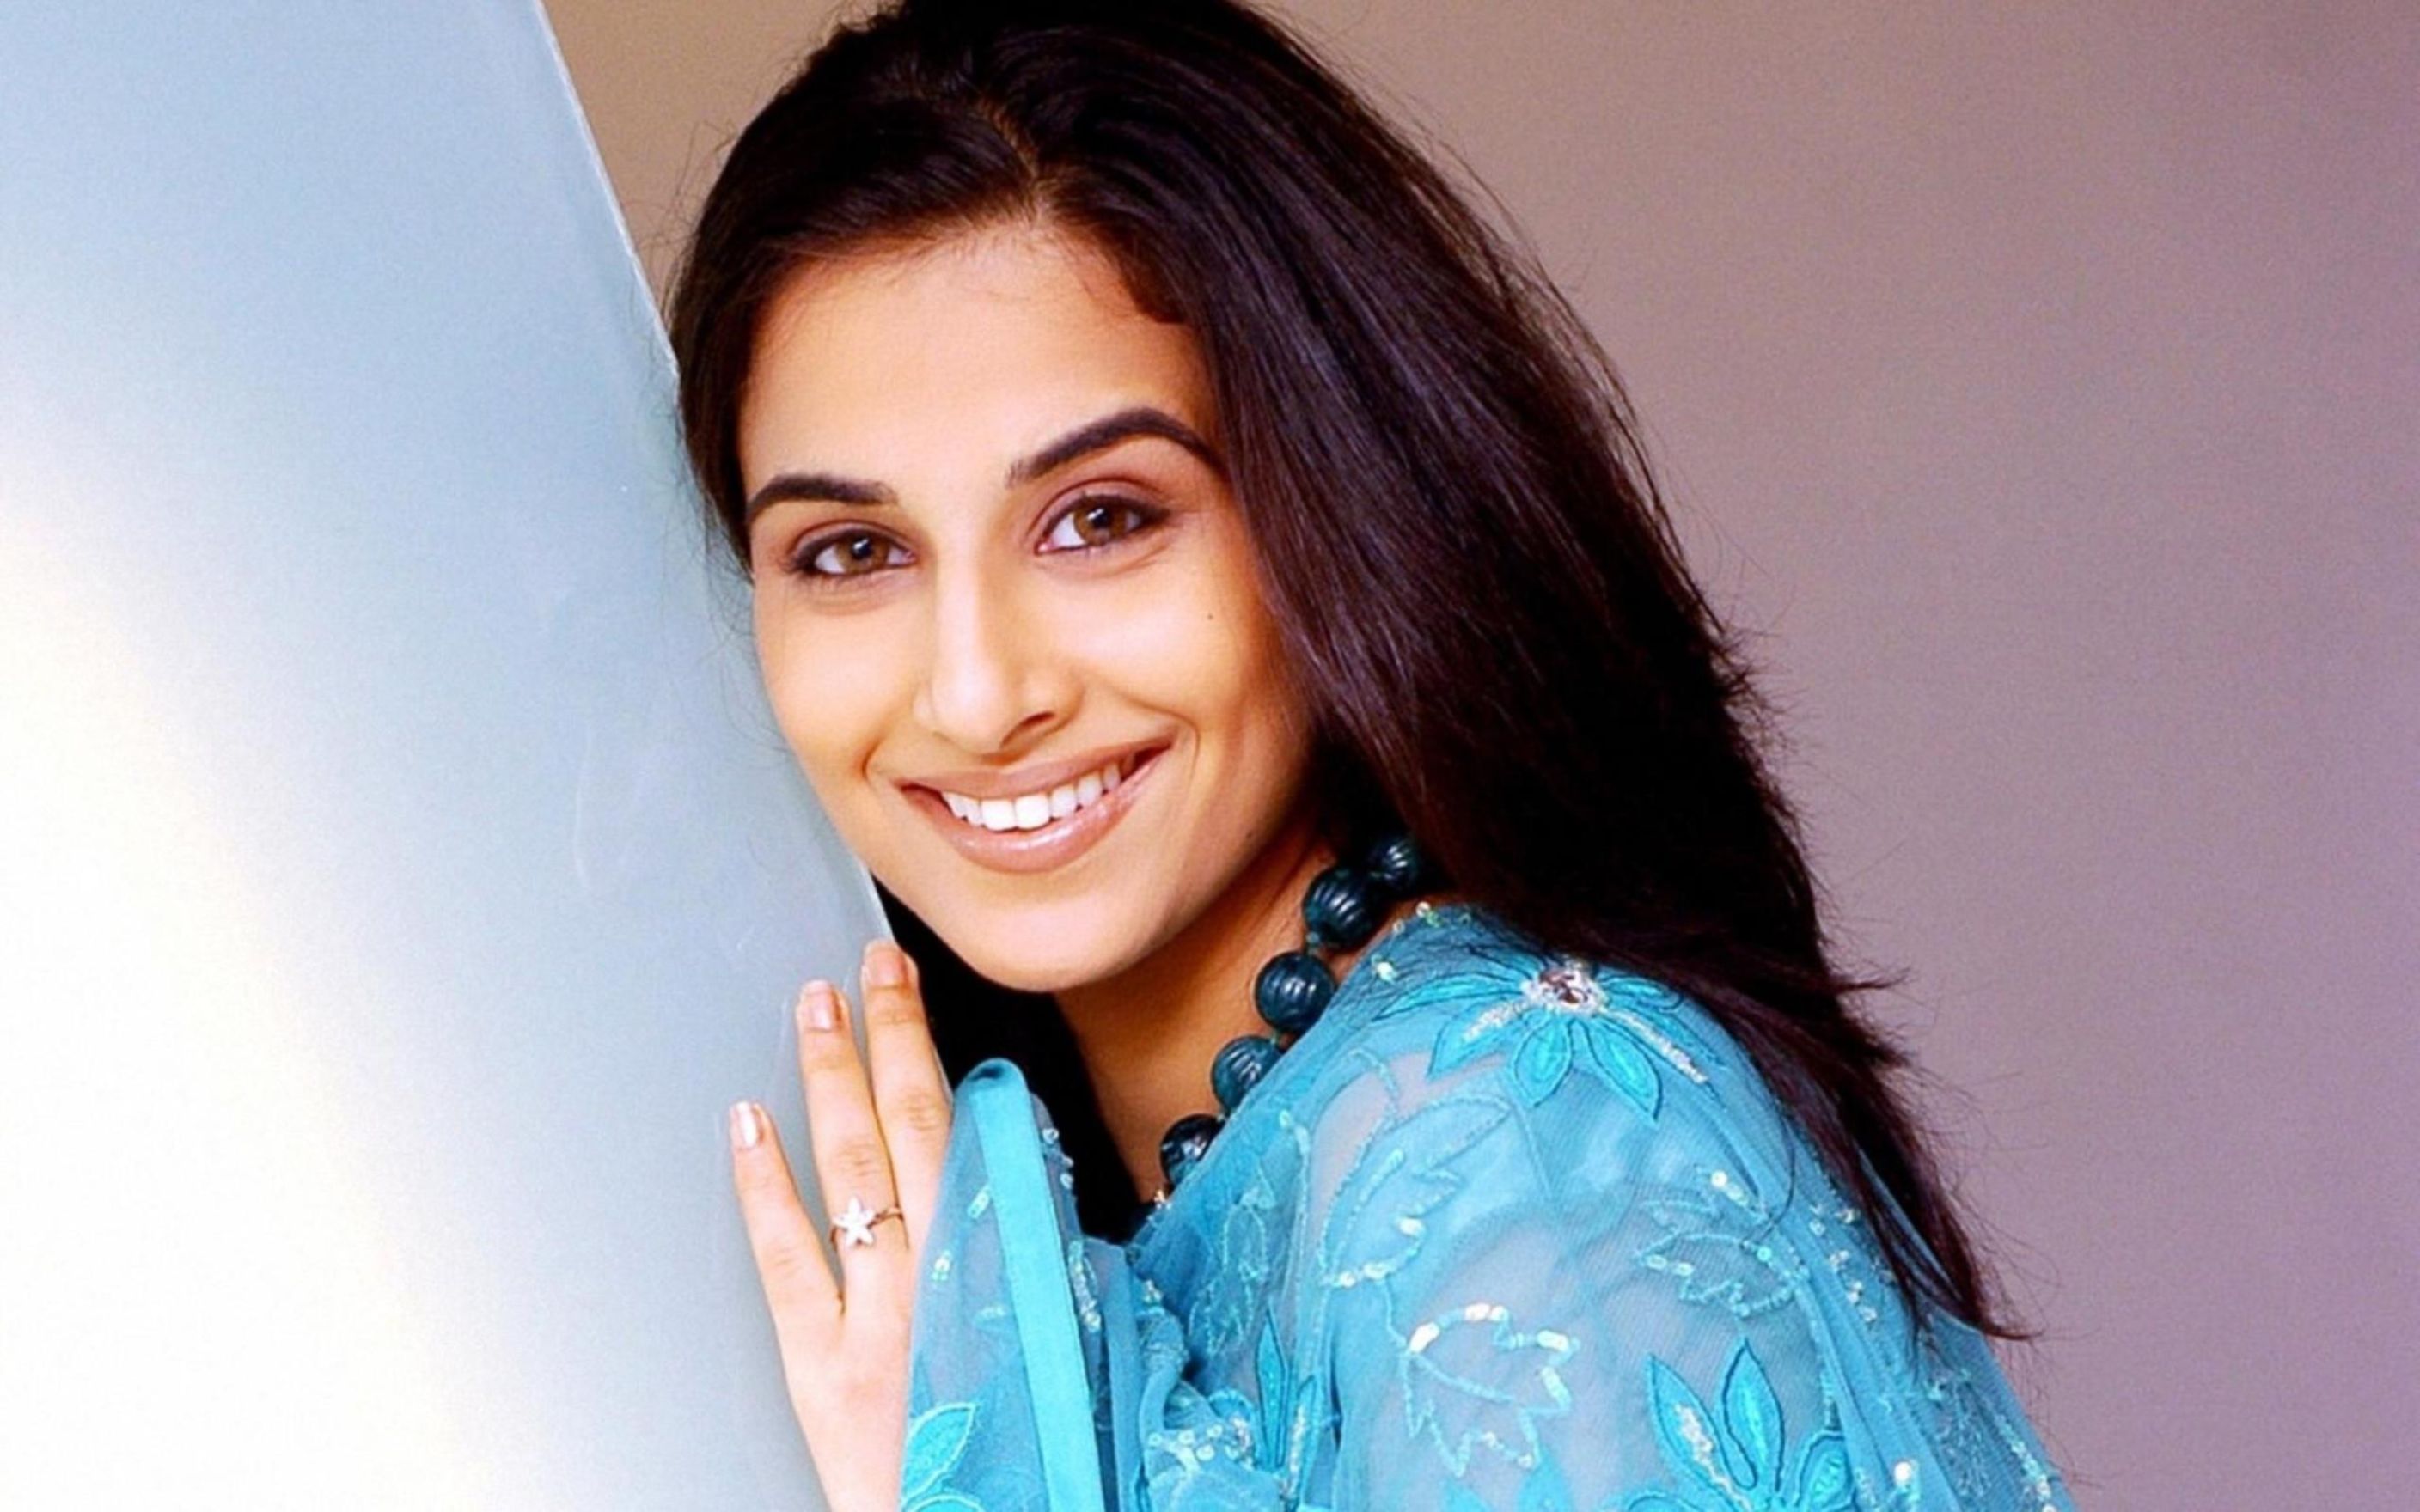 Lovely-Smile-Face-Of-Indian-Actress-Vidya-Balan-Wallpaper